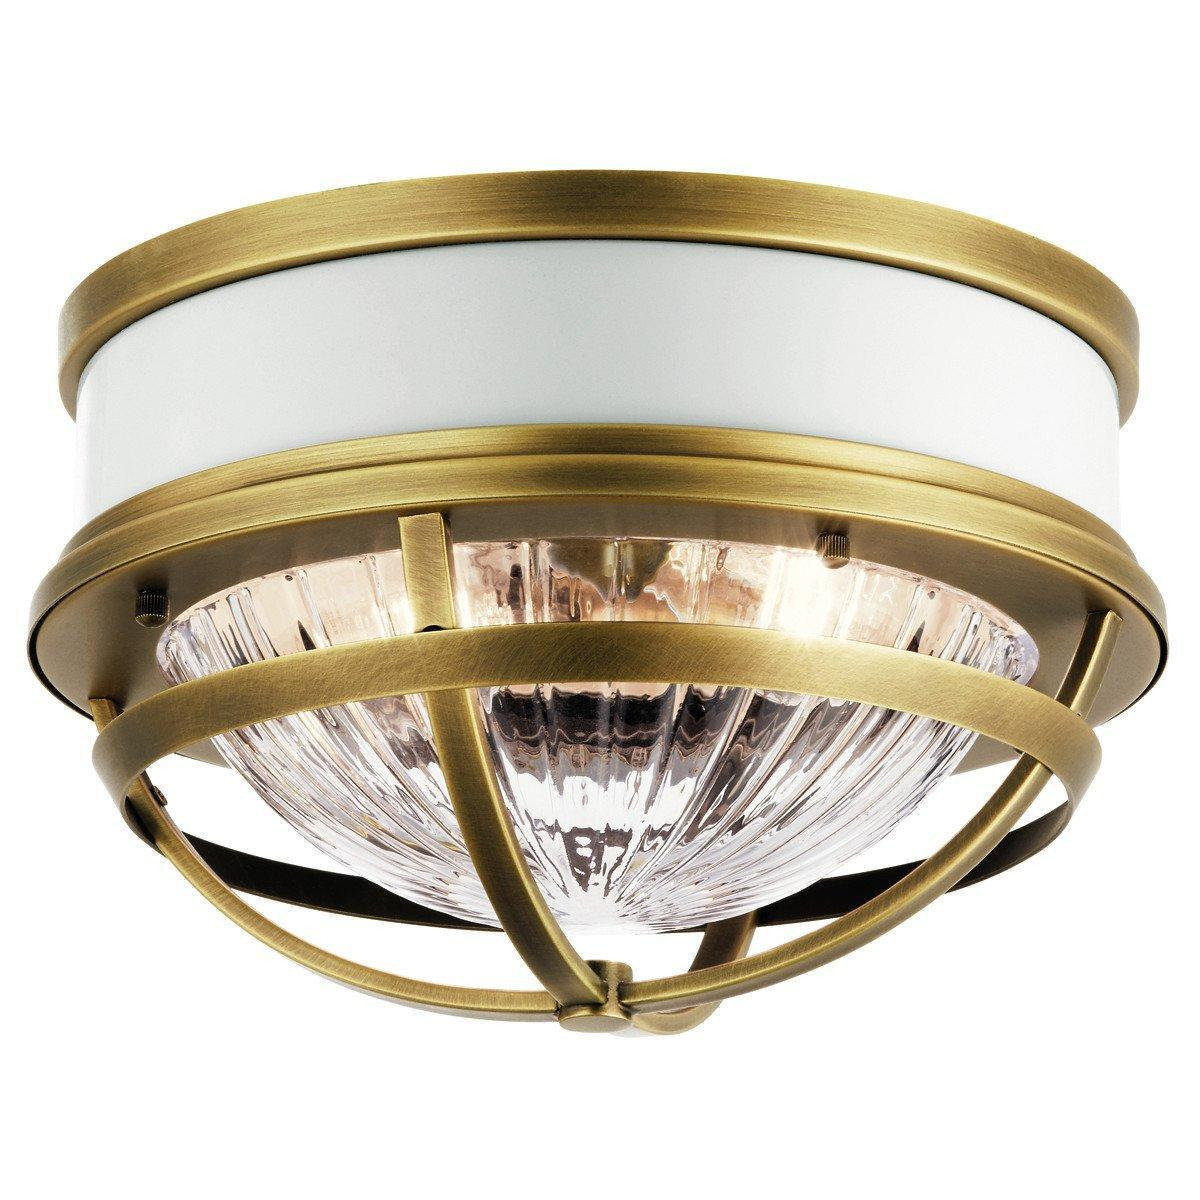 Kichler Tollis Bowl Semi Flush Ceiling Light Natural Brass & White - image 1